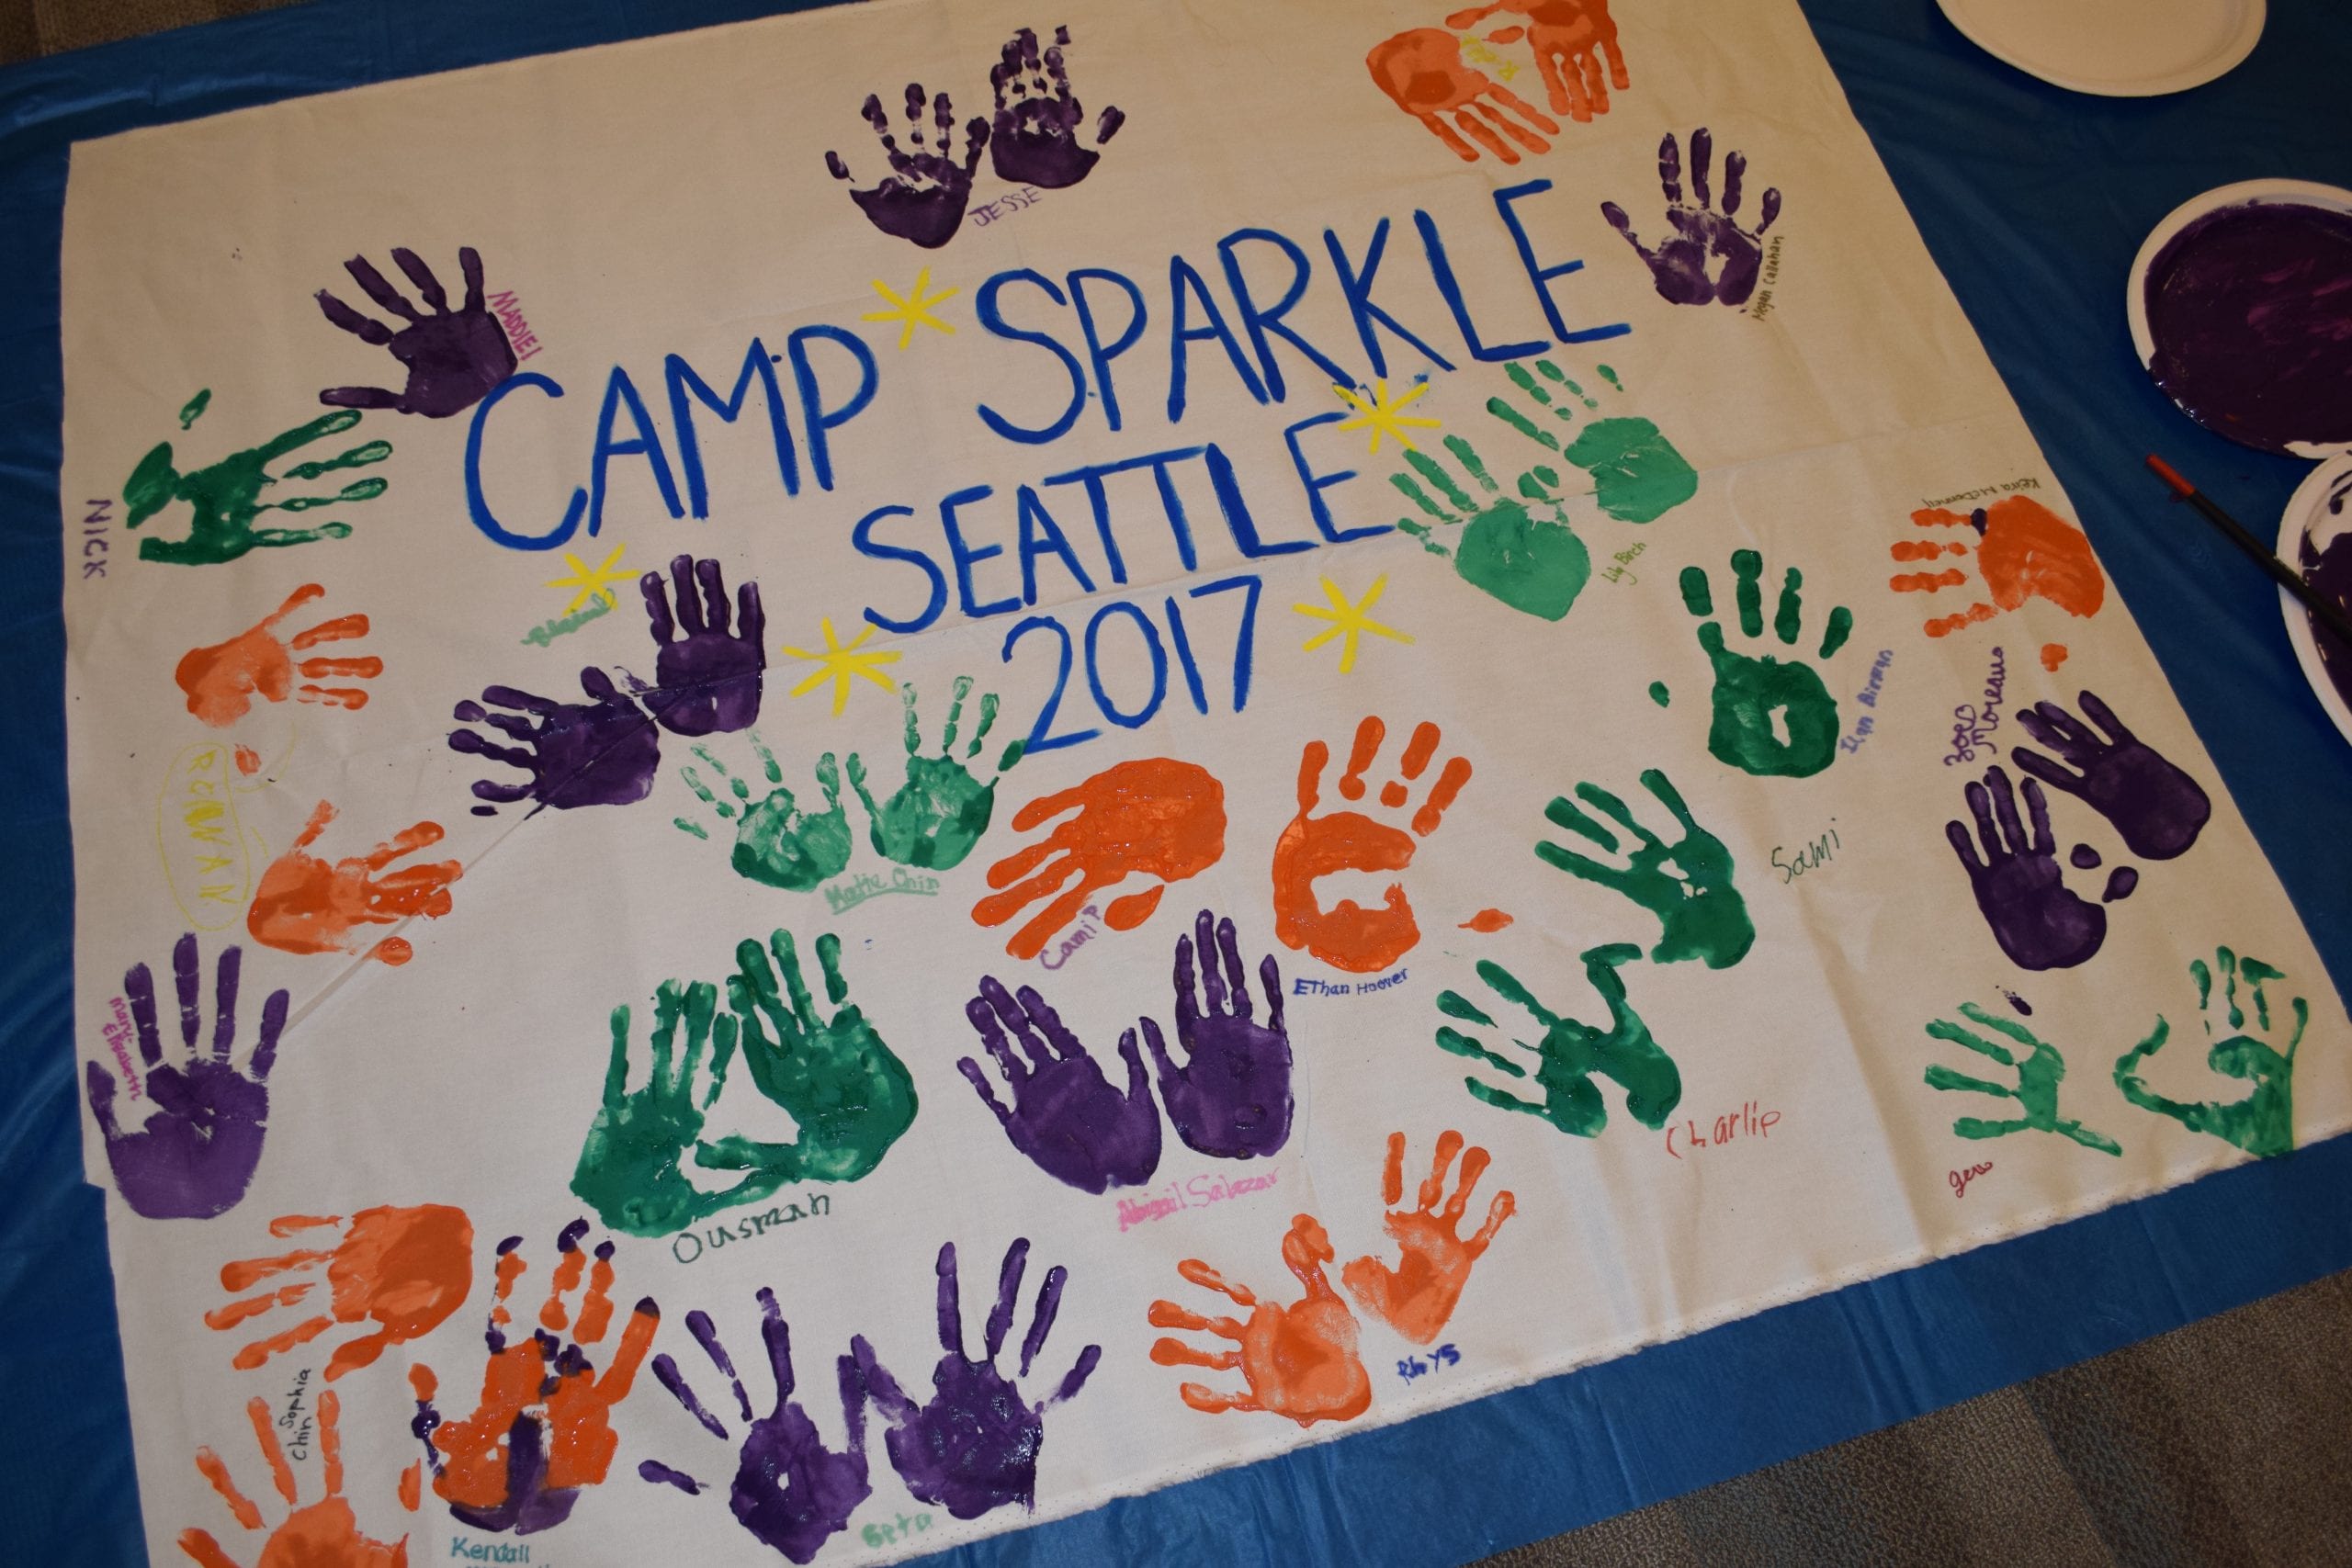 Camp Sparkle Seattle